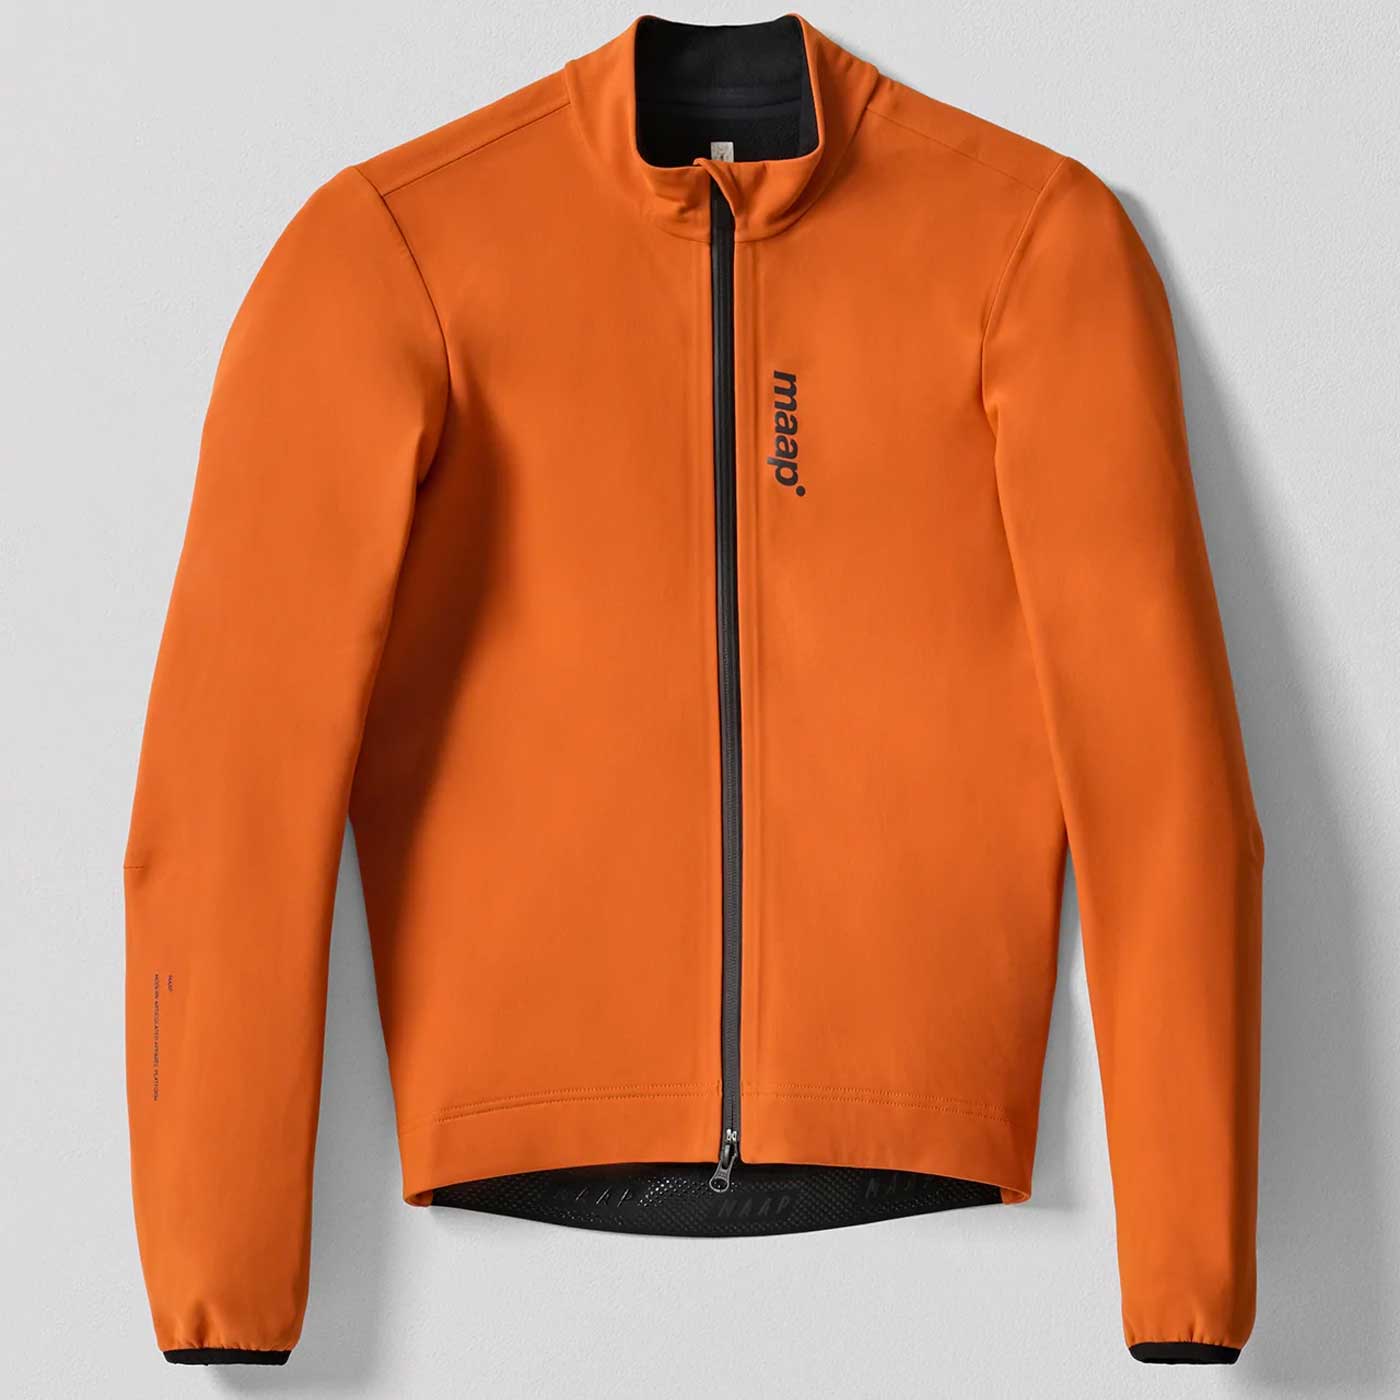 Maap Training Winter jacket - Orange | All4cycling